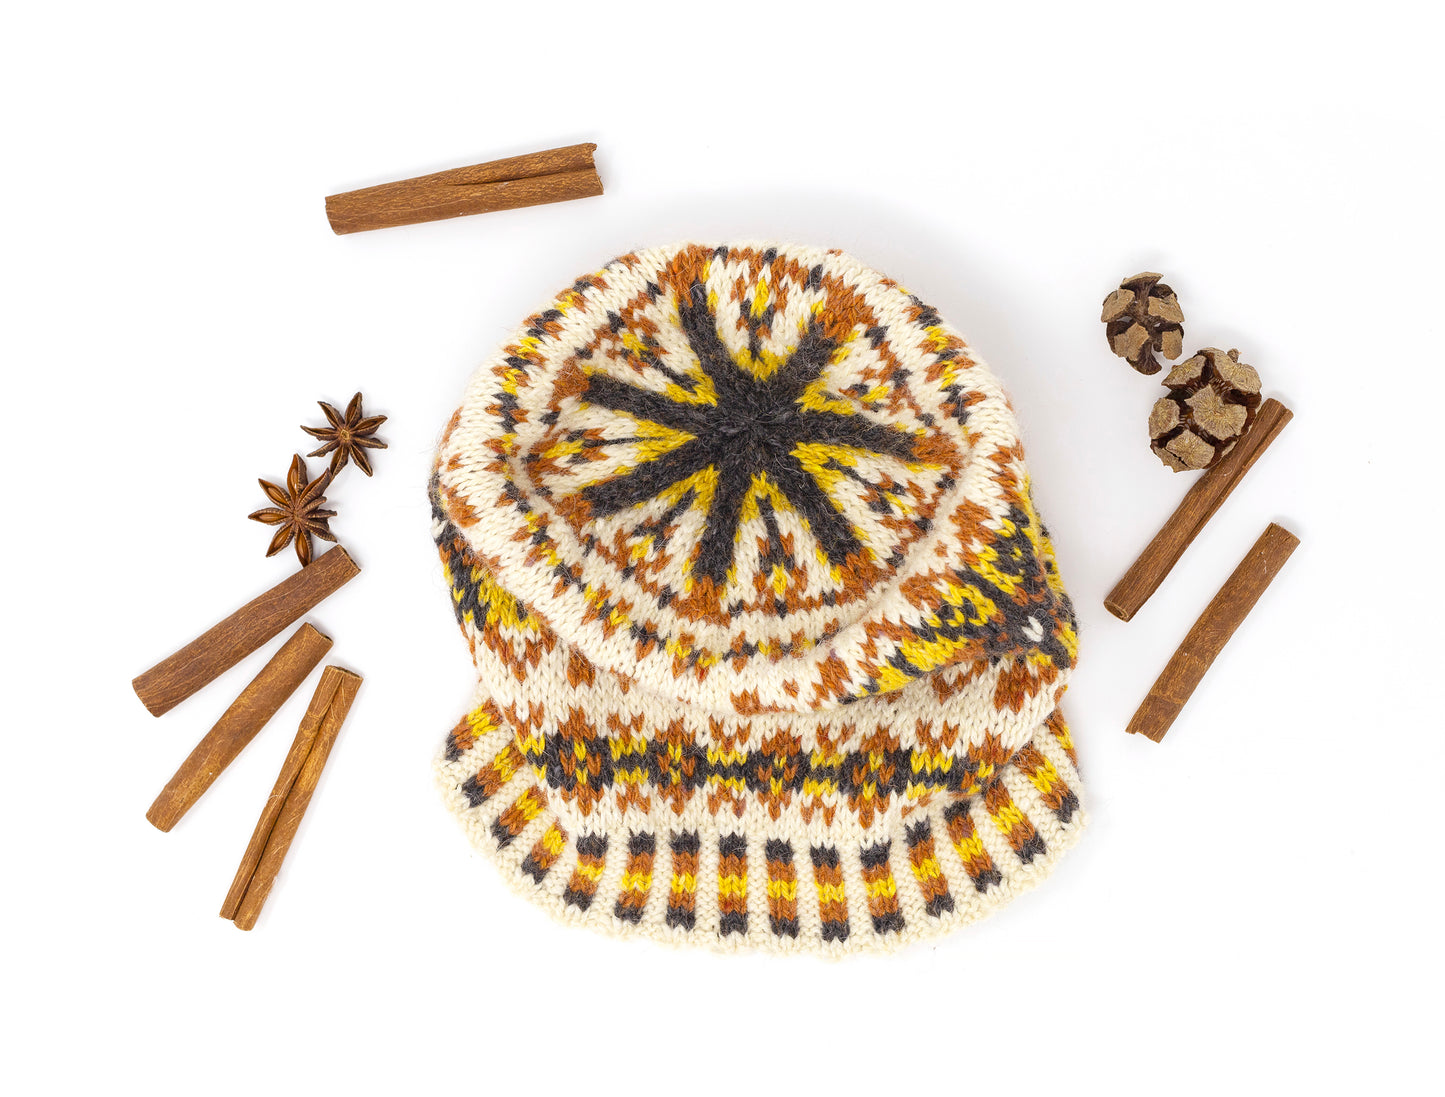 yellow, orange, black and white wool hand-knitted Fair Isle beanie hat, top view